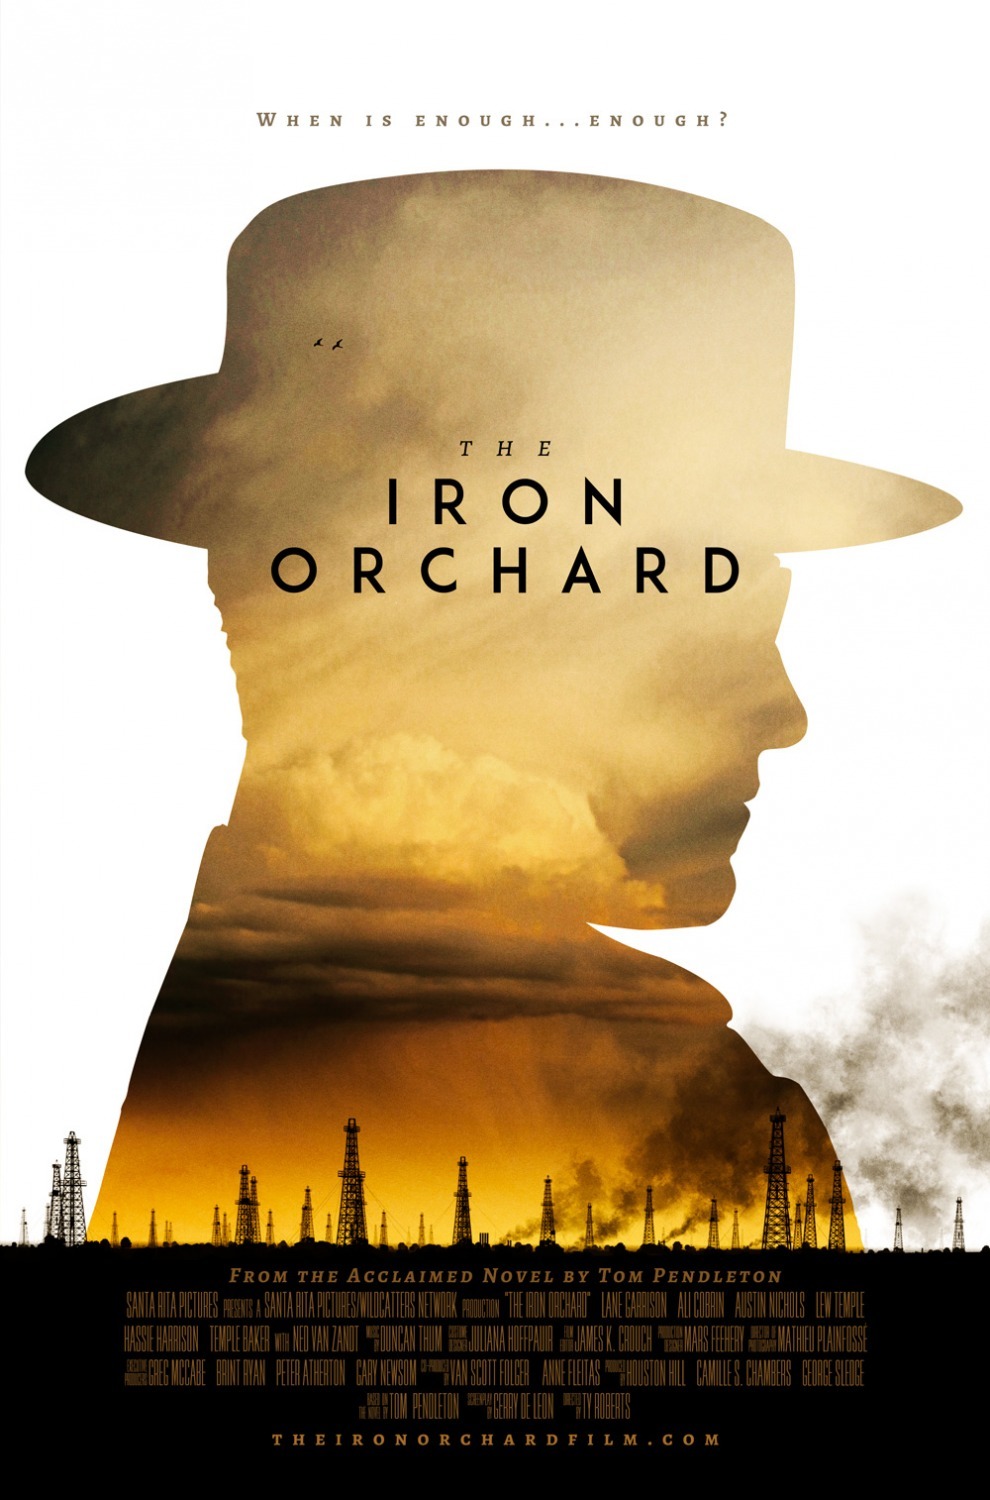 Nonton film The Iron Orchard layarkaca21 indoxx1 ganool online streaming terbaru